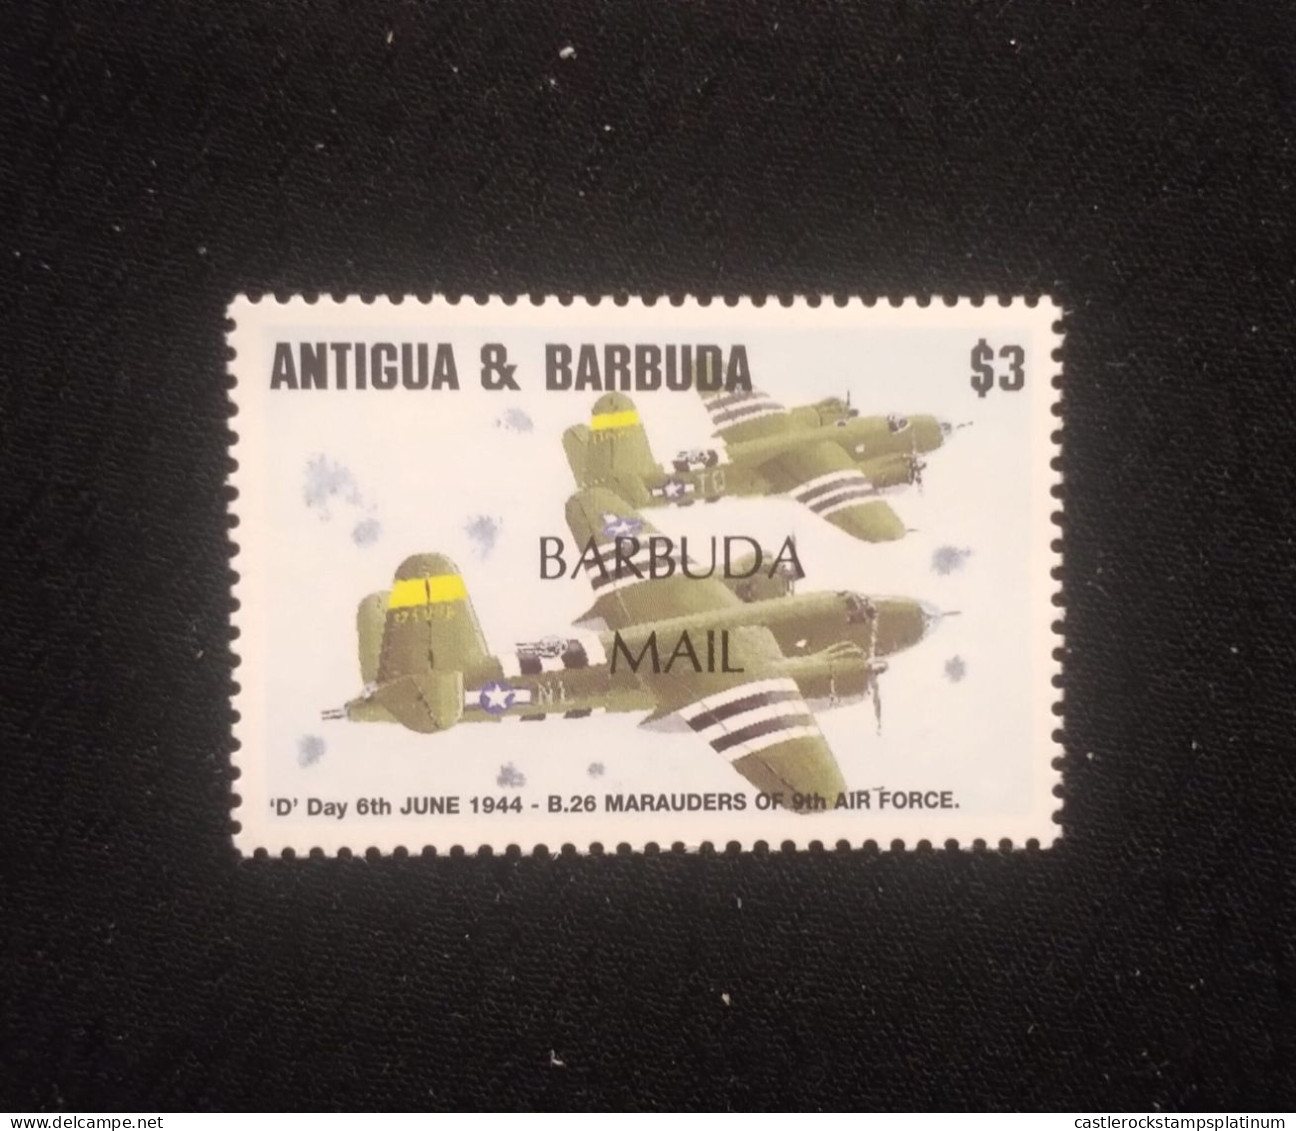 O) 1995 ANTIGUA AND BARBUDA, OLD WAR AIRCRAFT - TWIN-ENGINE BOMBER, MNH - Antigua Y Barbuda (1981-...)